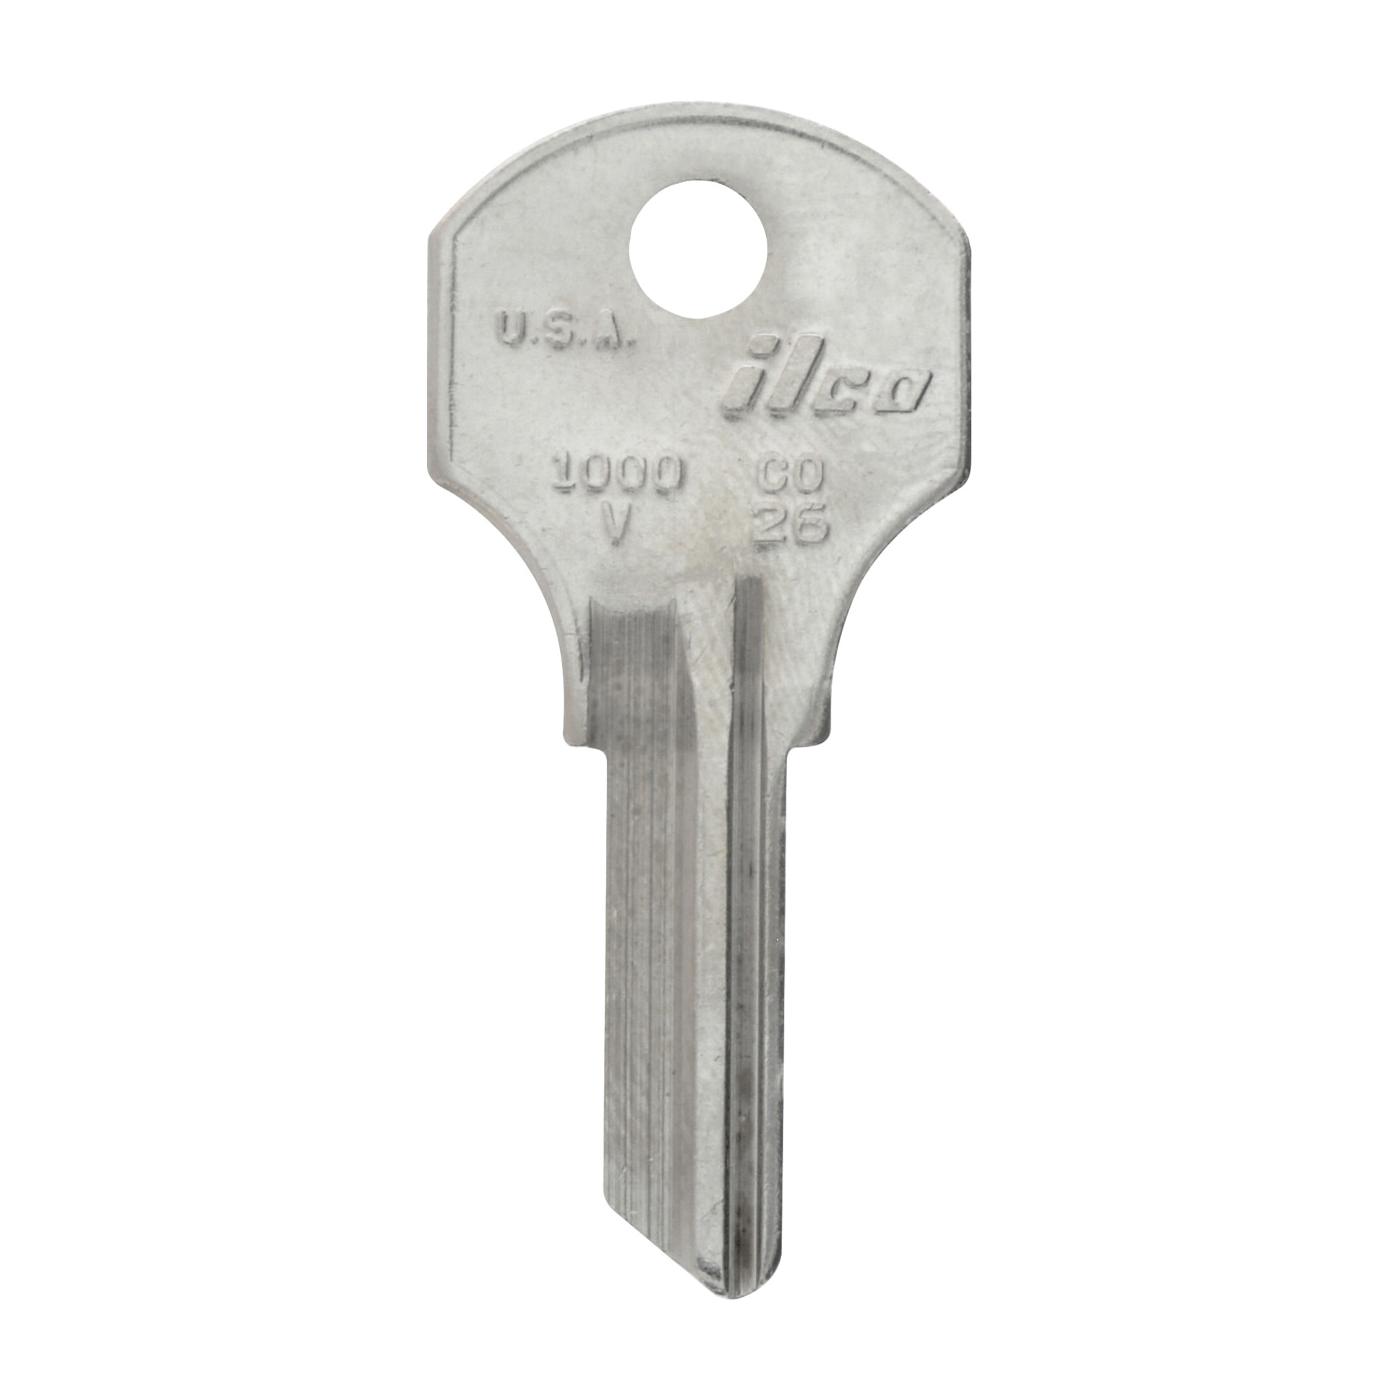 441540 Key, For: Corbin Locks